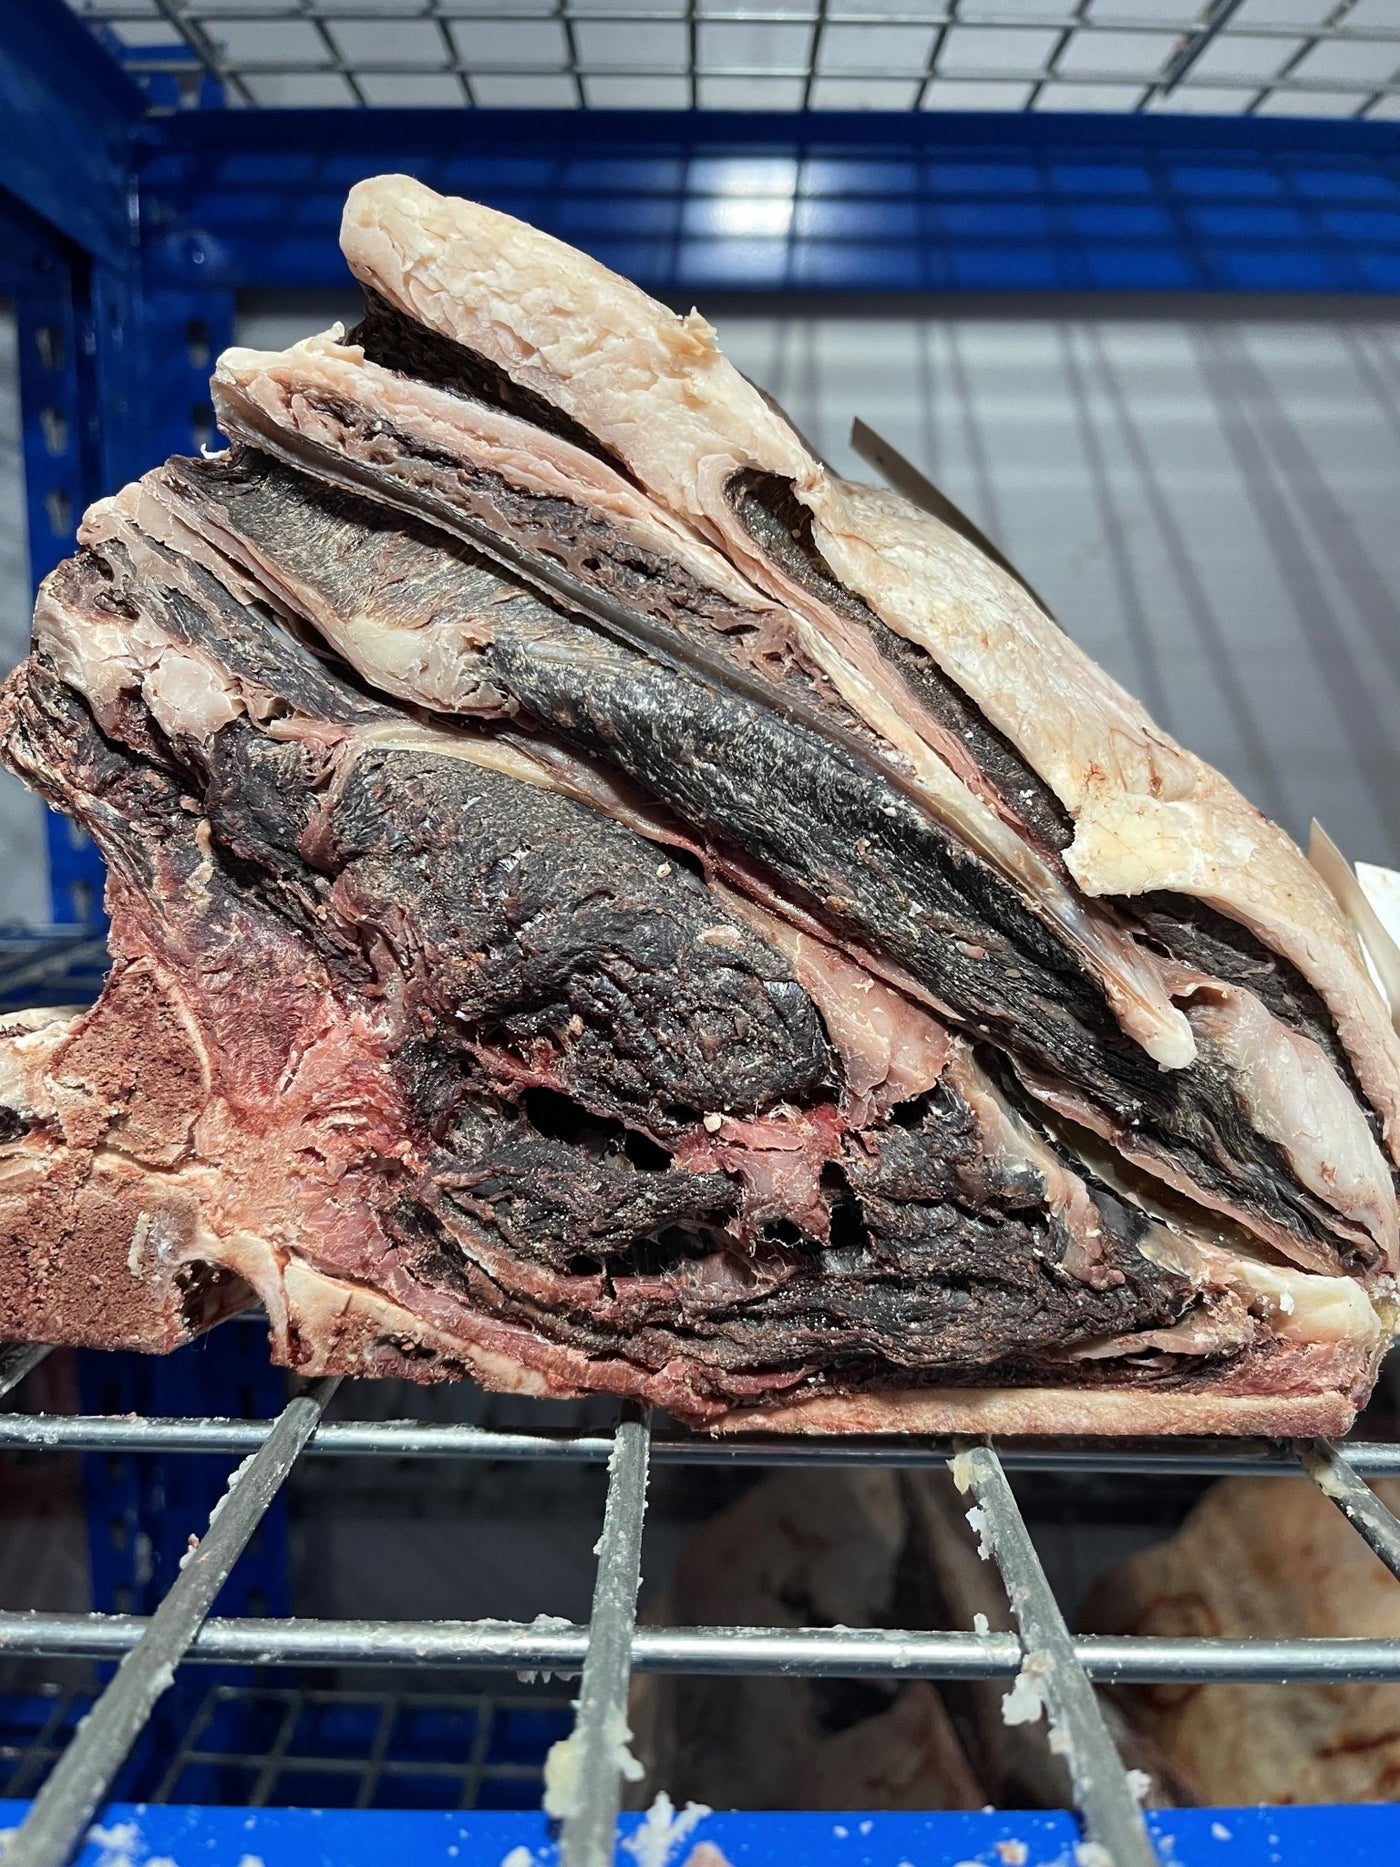 150 Day Dry-Aged Hereford x - Thomas Joseph Butchery - Ethical Dry-Aged Meat The Best Steak UK Thomas Joseph Butchery